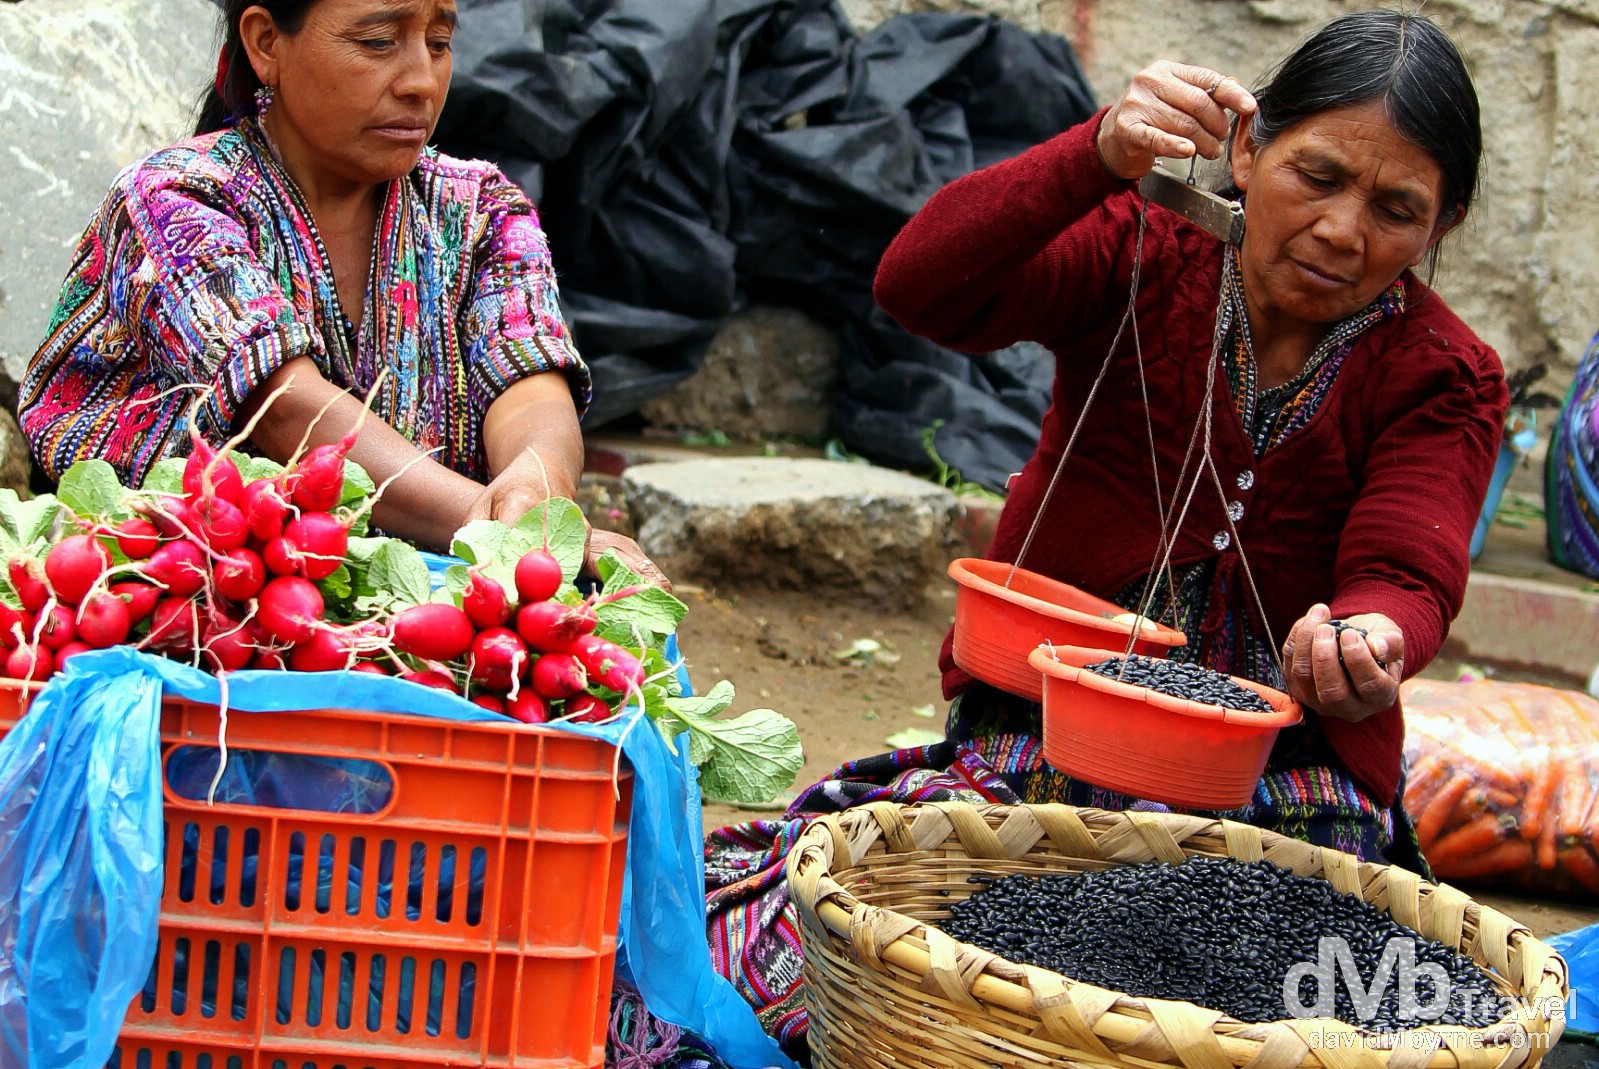 Solola Market, Guatemala. May 21st 2013.